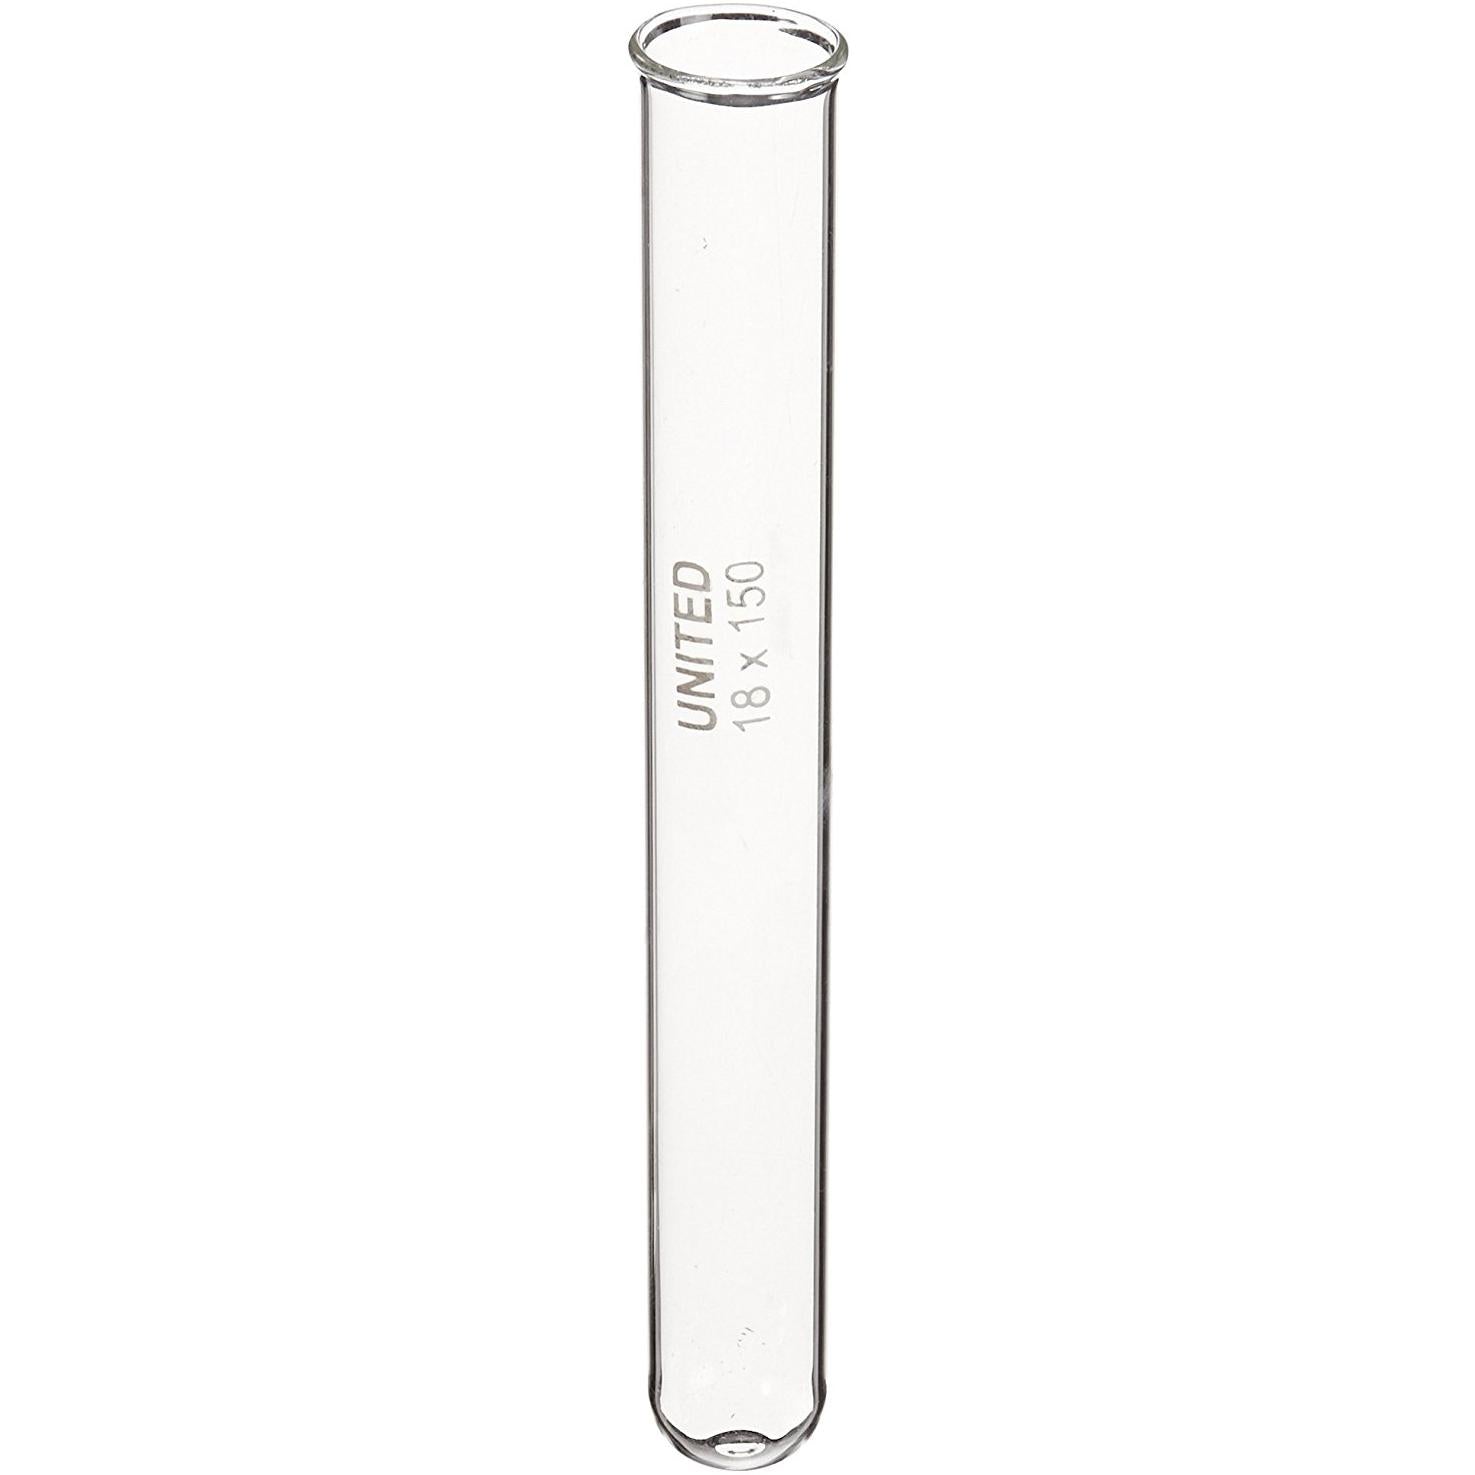 Test Tubes with Rim, Borosilicate Glass